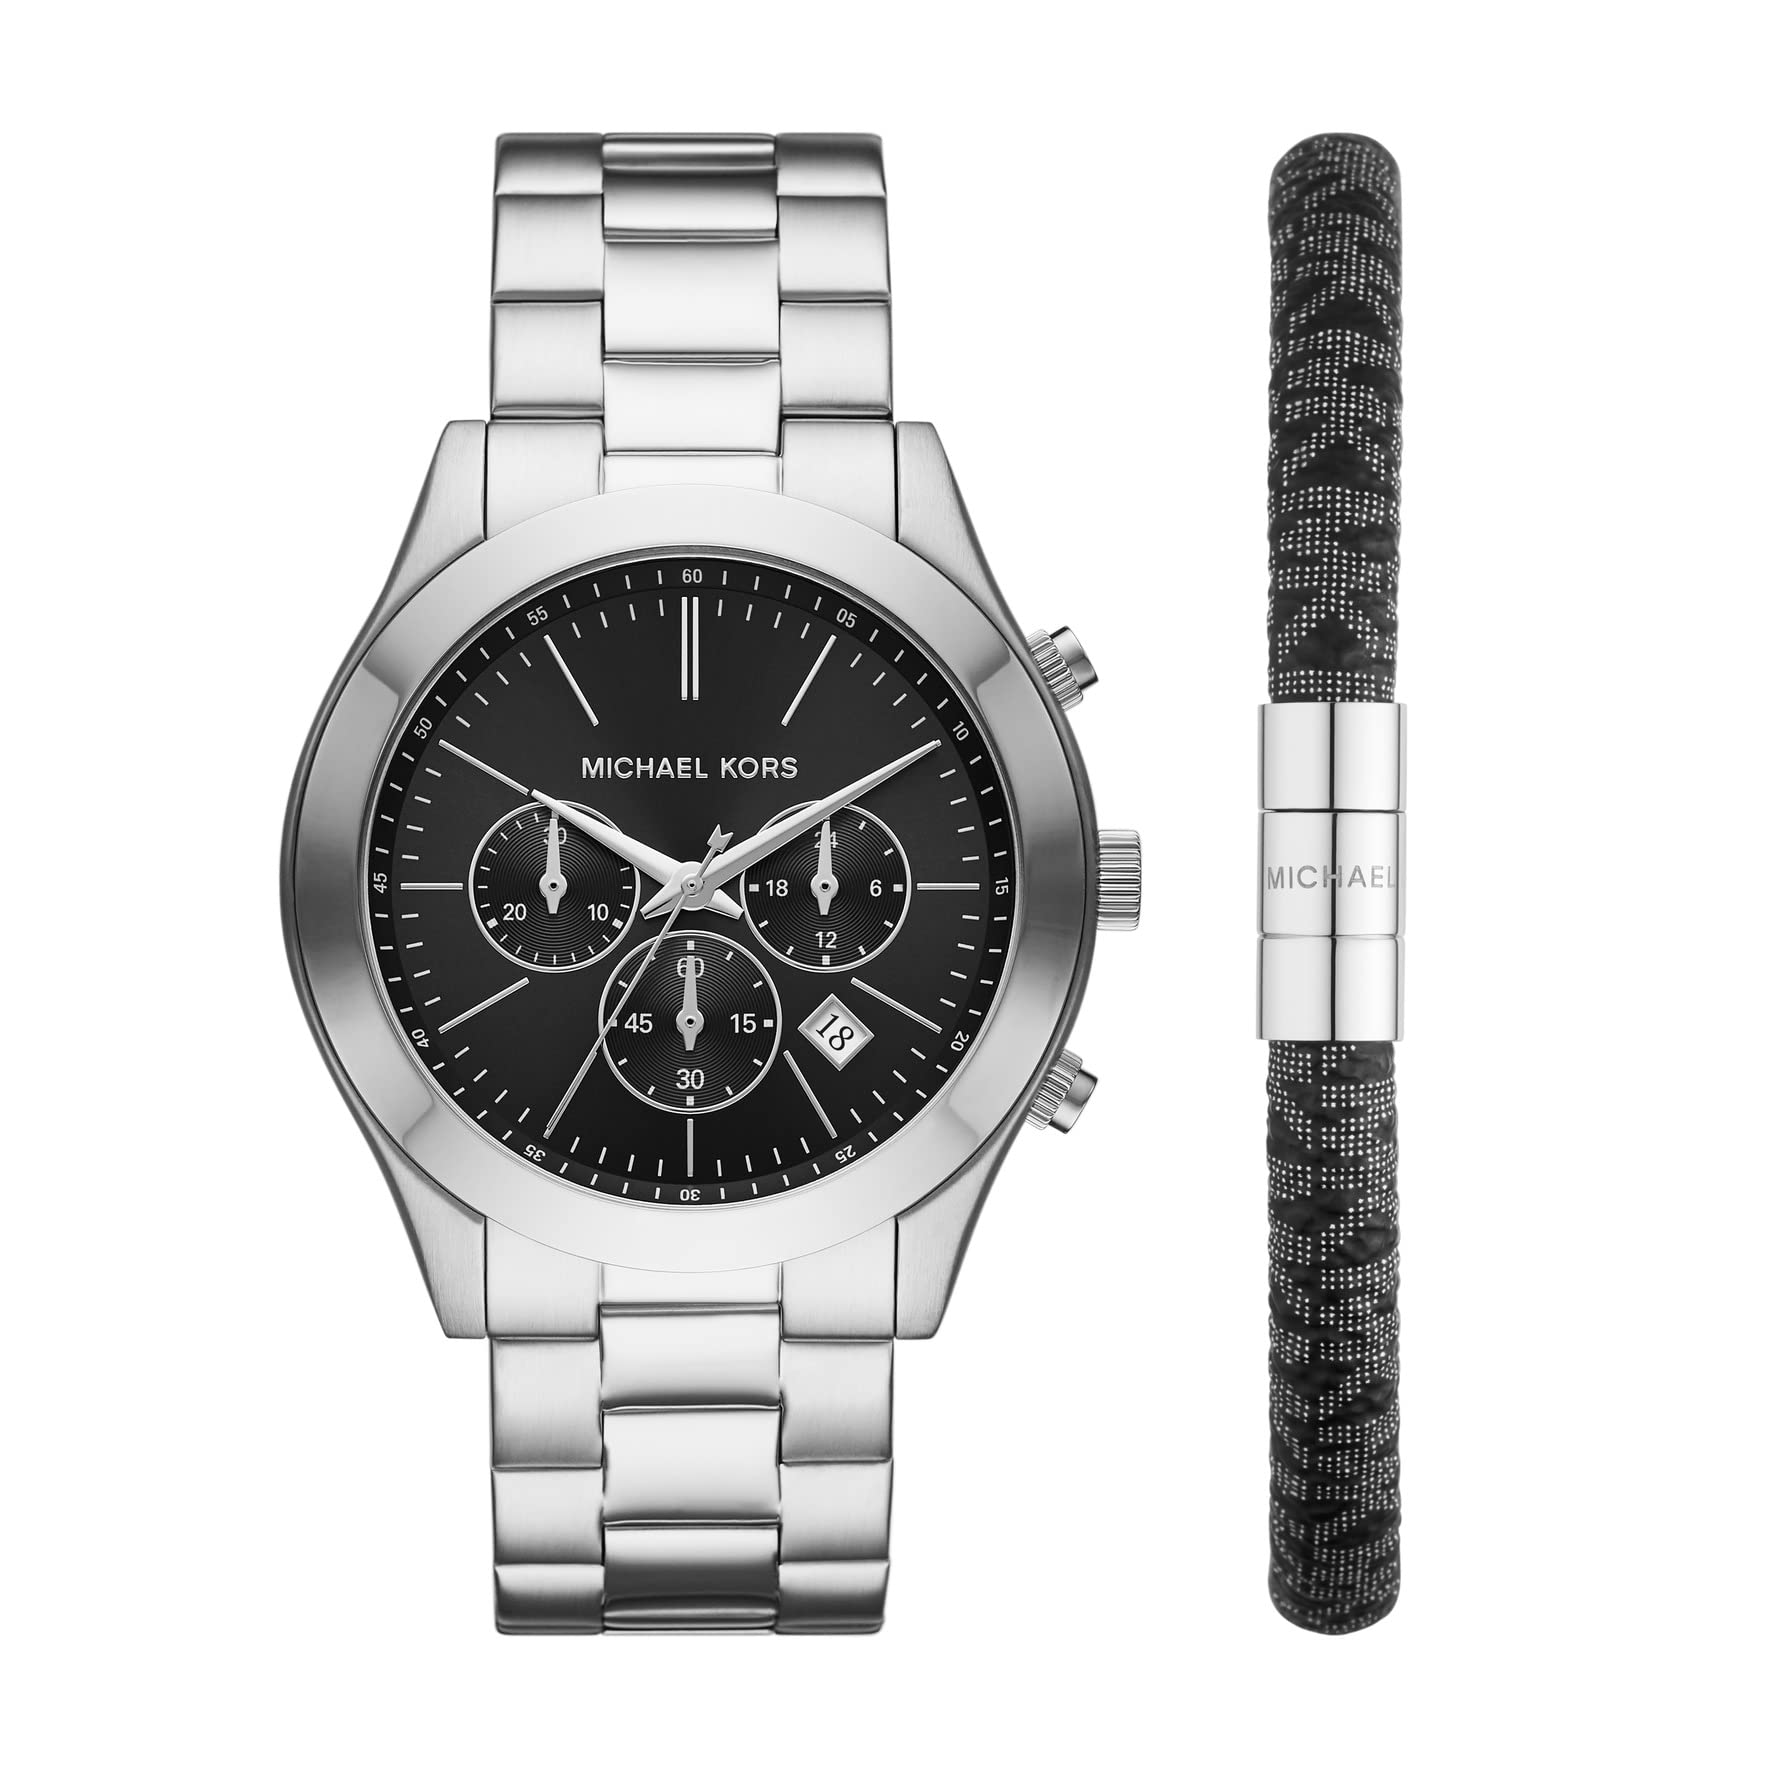 Michael Kors Watch Lot 4 Watches Models MK4004 4178 2025 4165  eBay